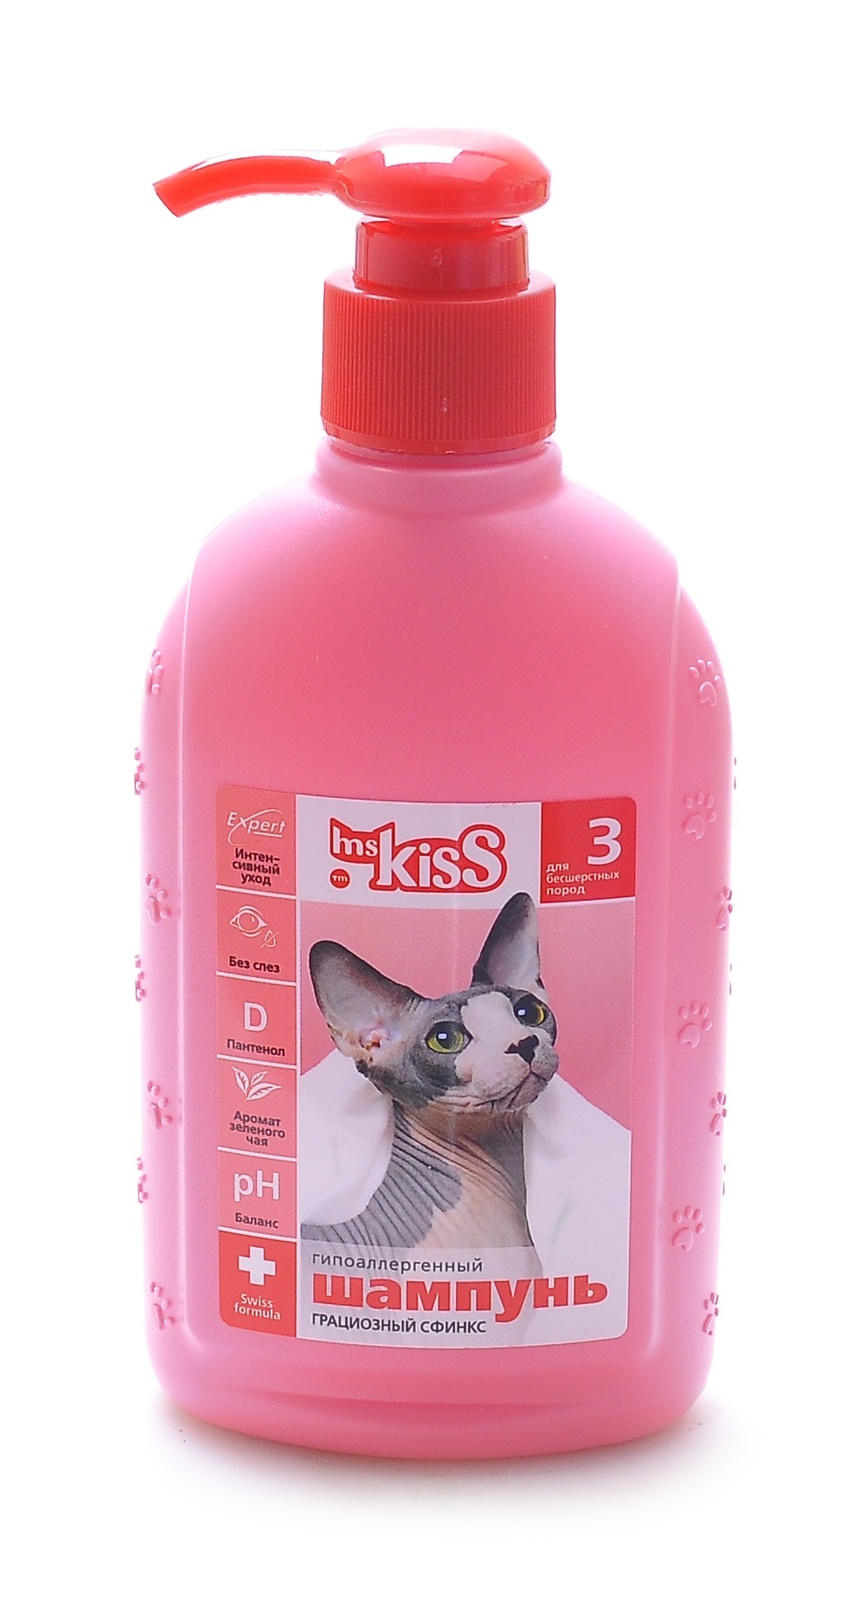 Ms.Kiss Ms.Kiss шампунь для бесшерстных пород Грациозный сфинкс (200 г) ms kiss шампунь для кошек грациозный сфинкс